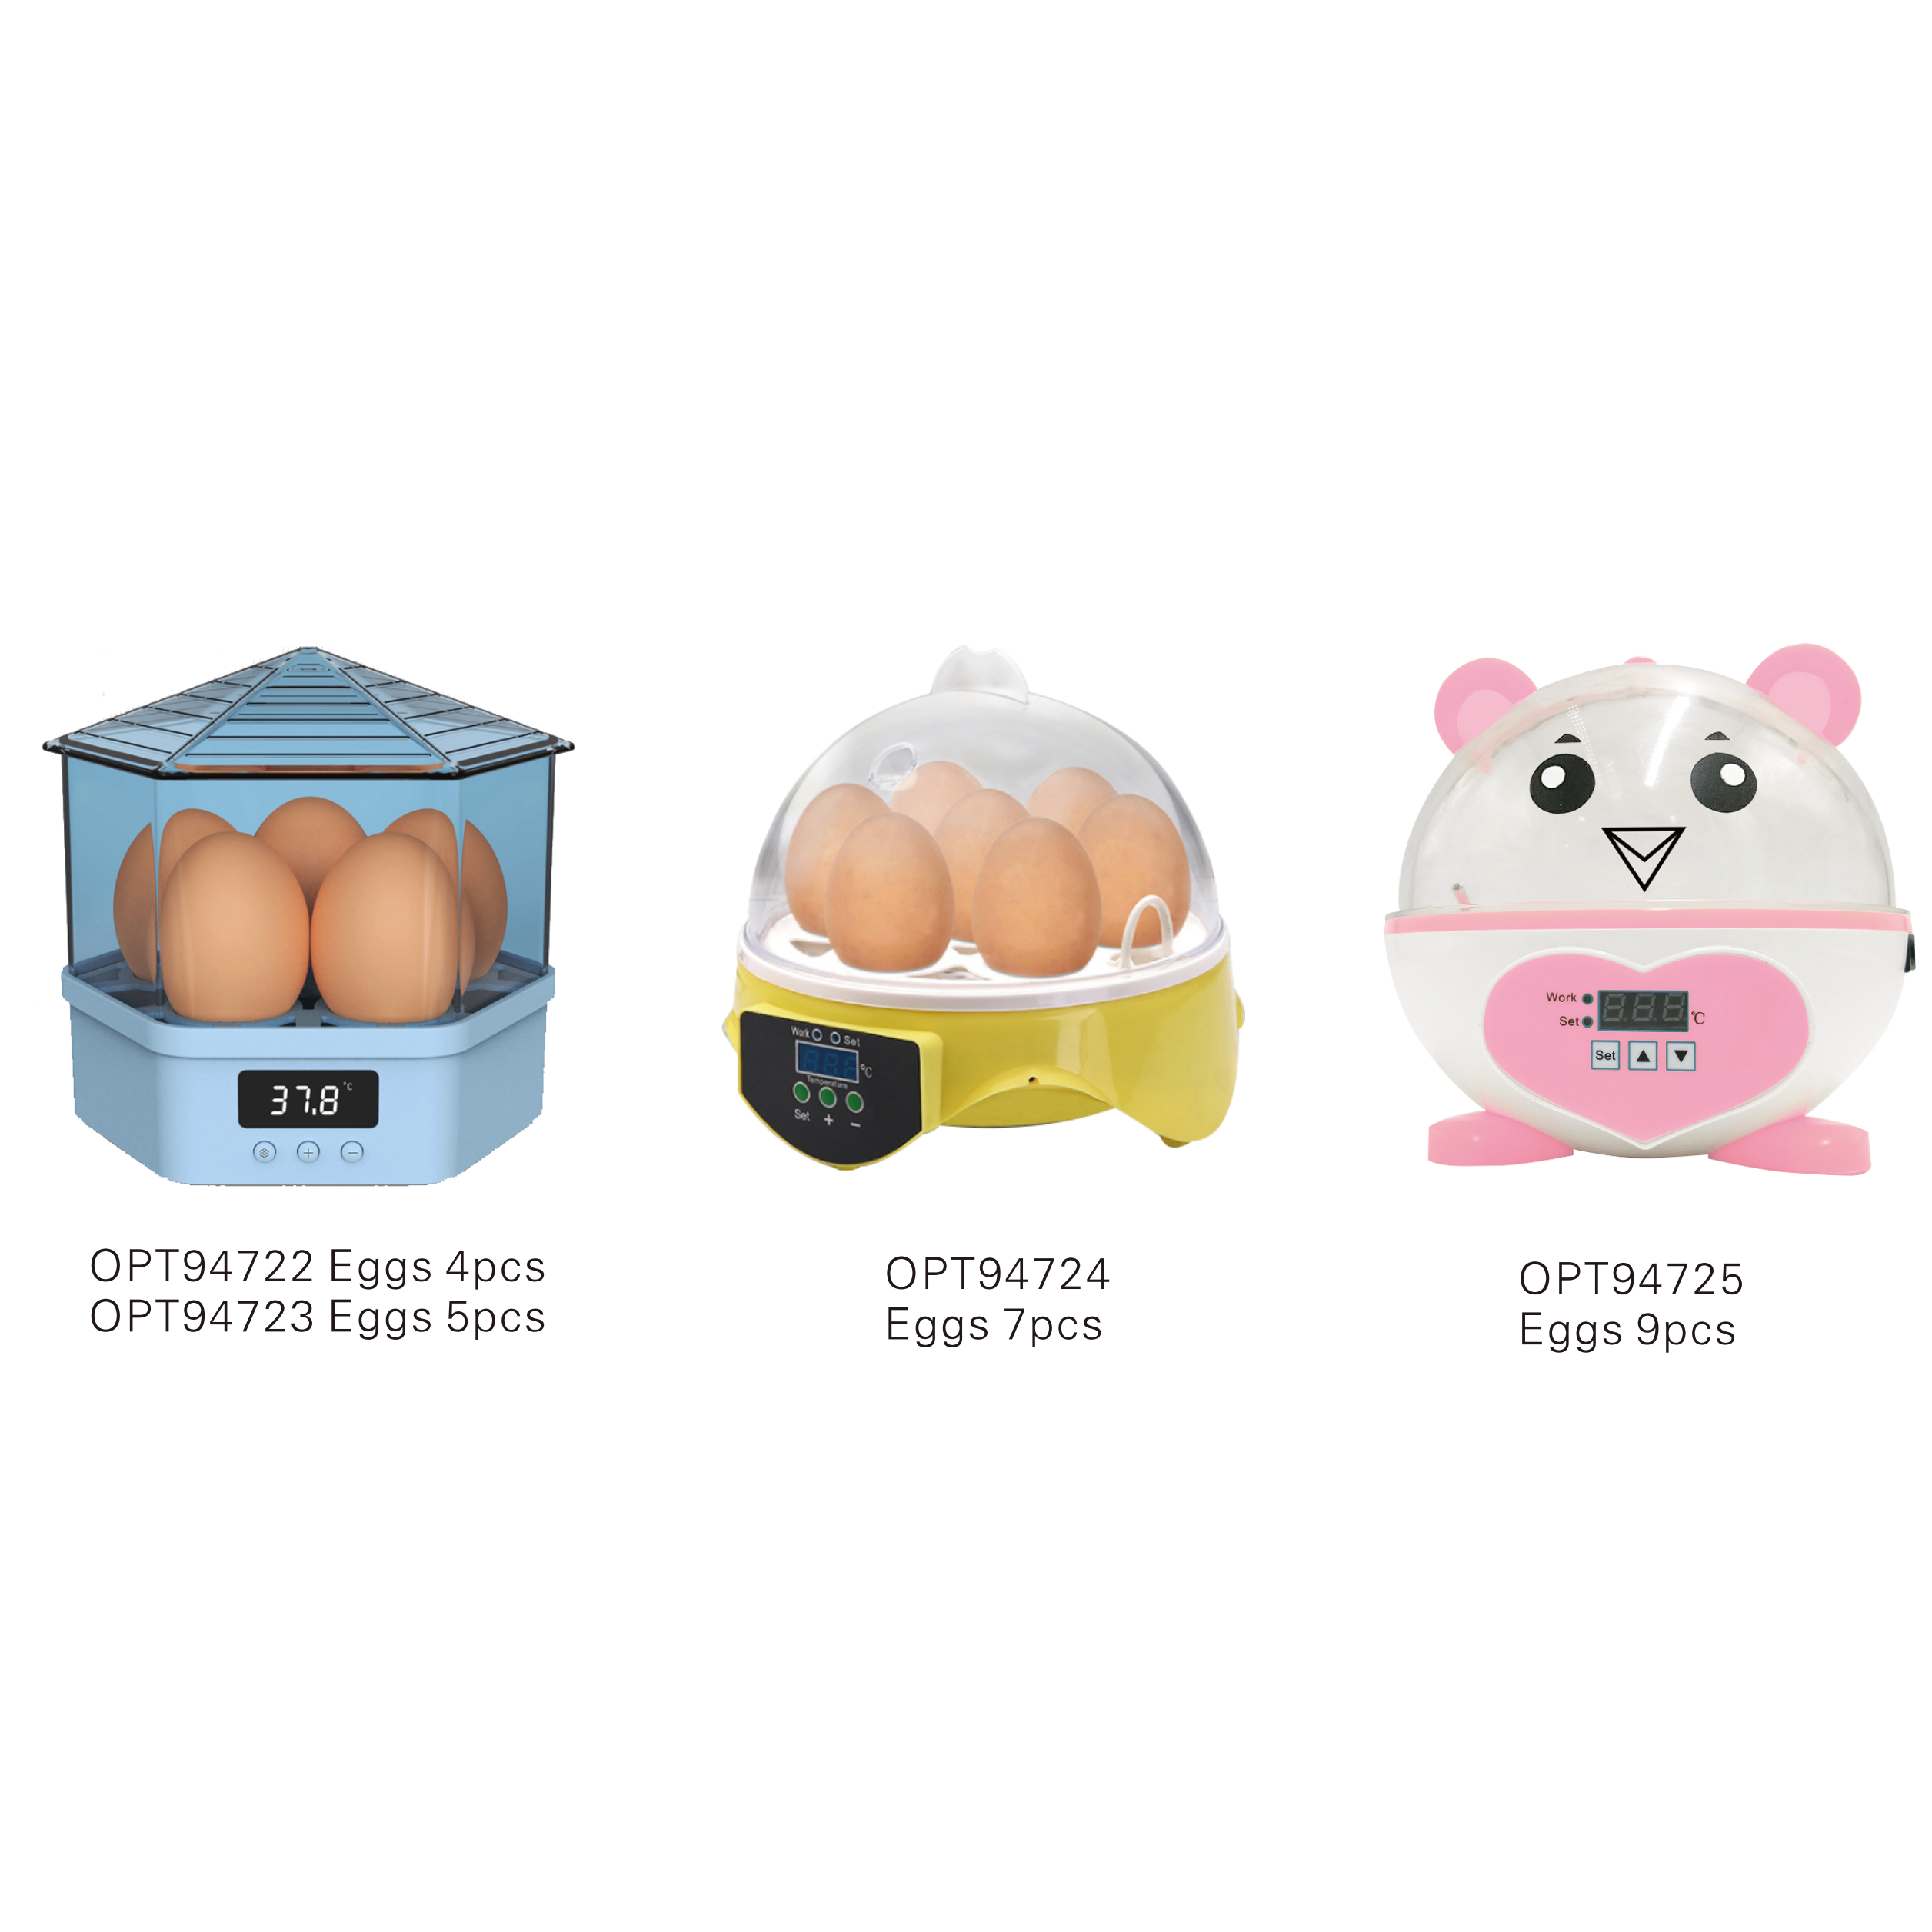 OPT94722-OPT94725 Poultry Egg Incubators